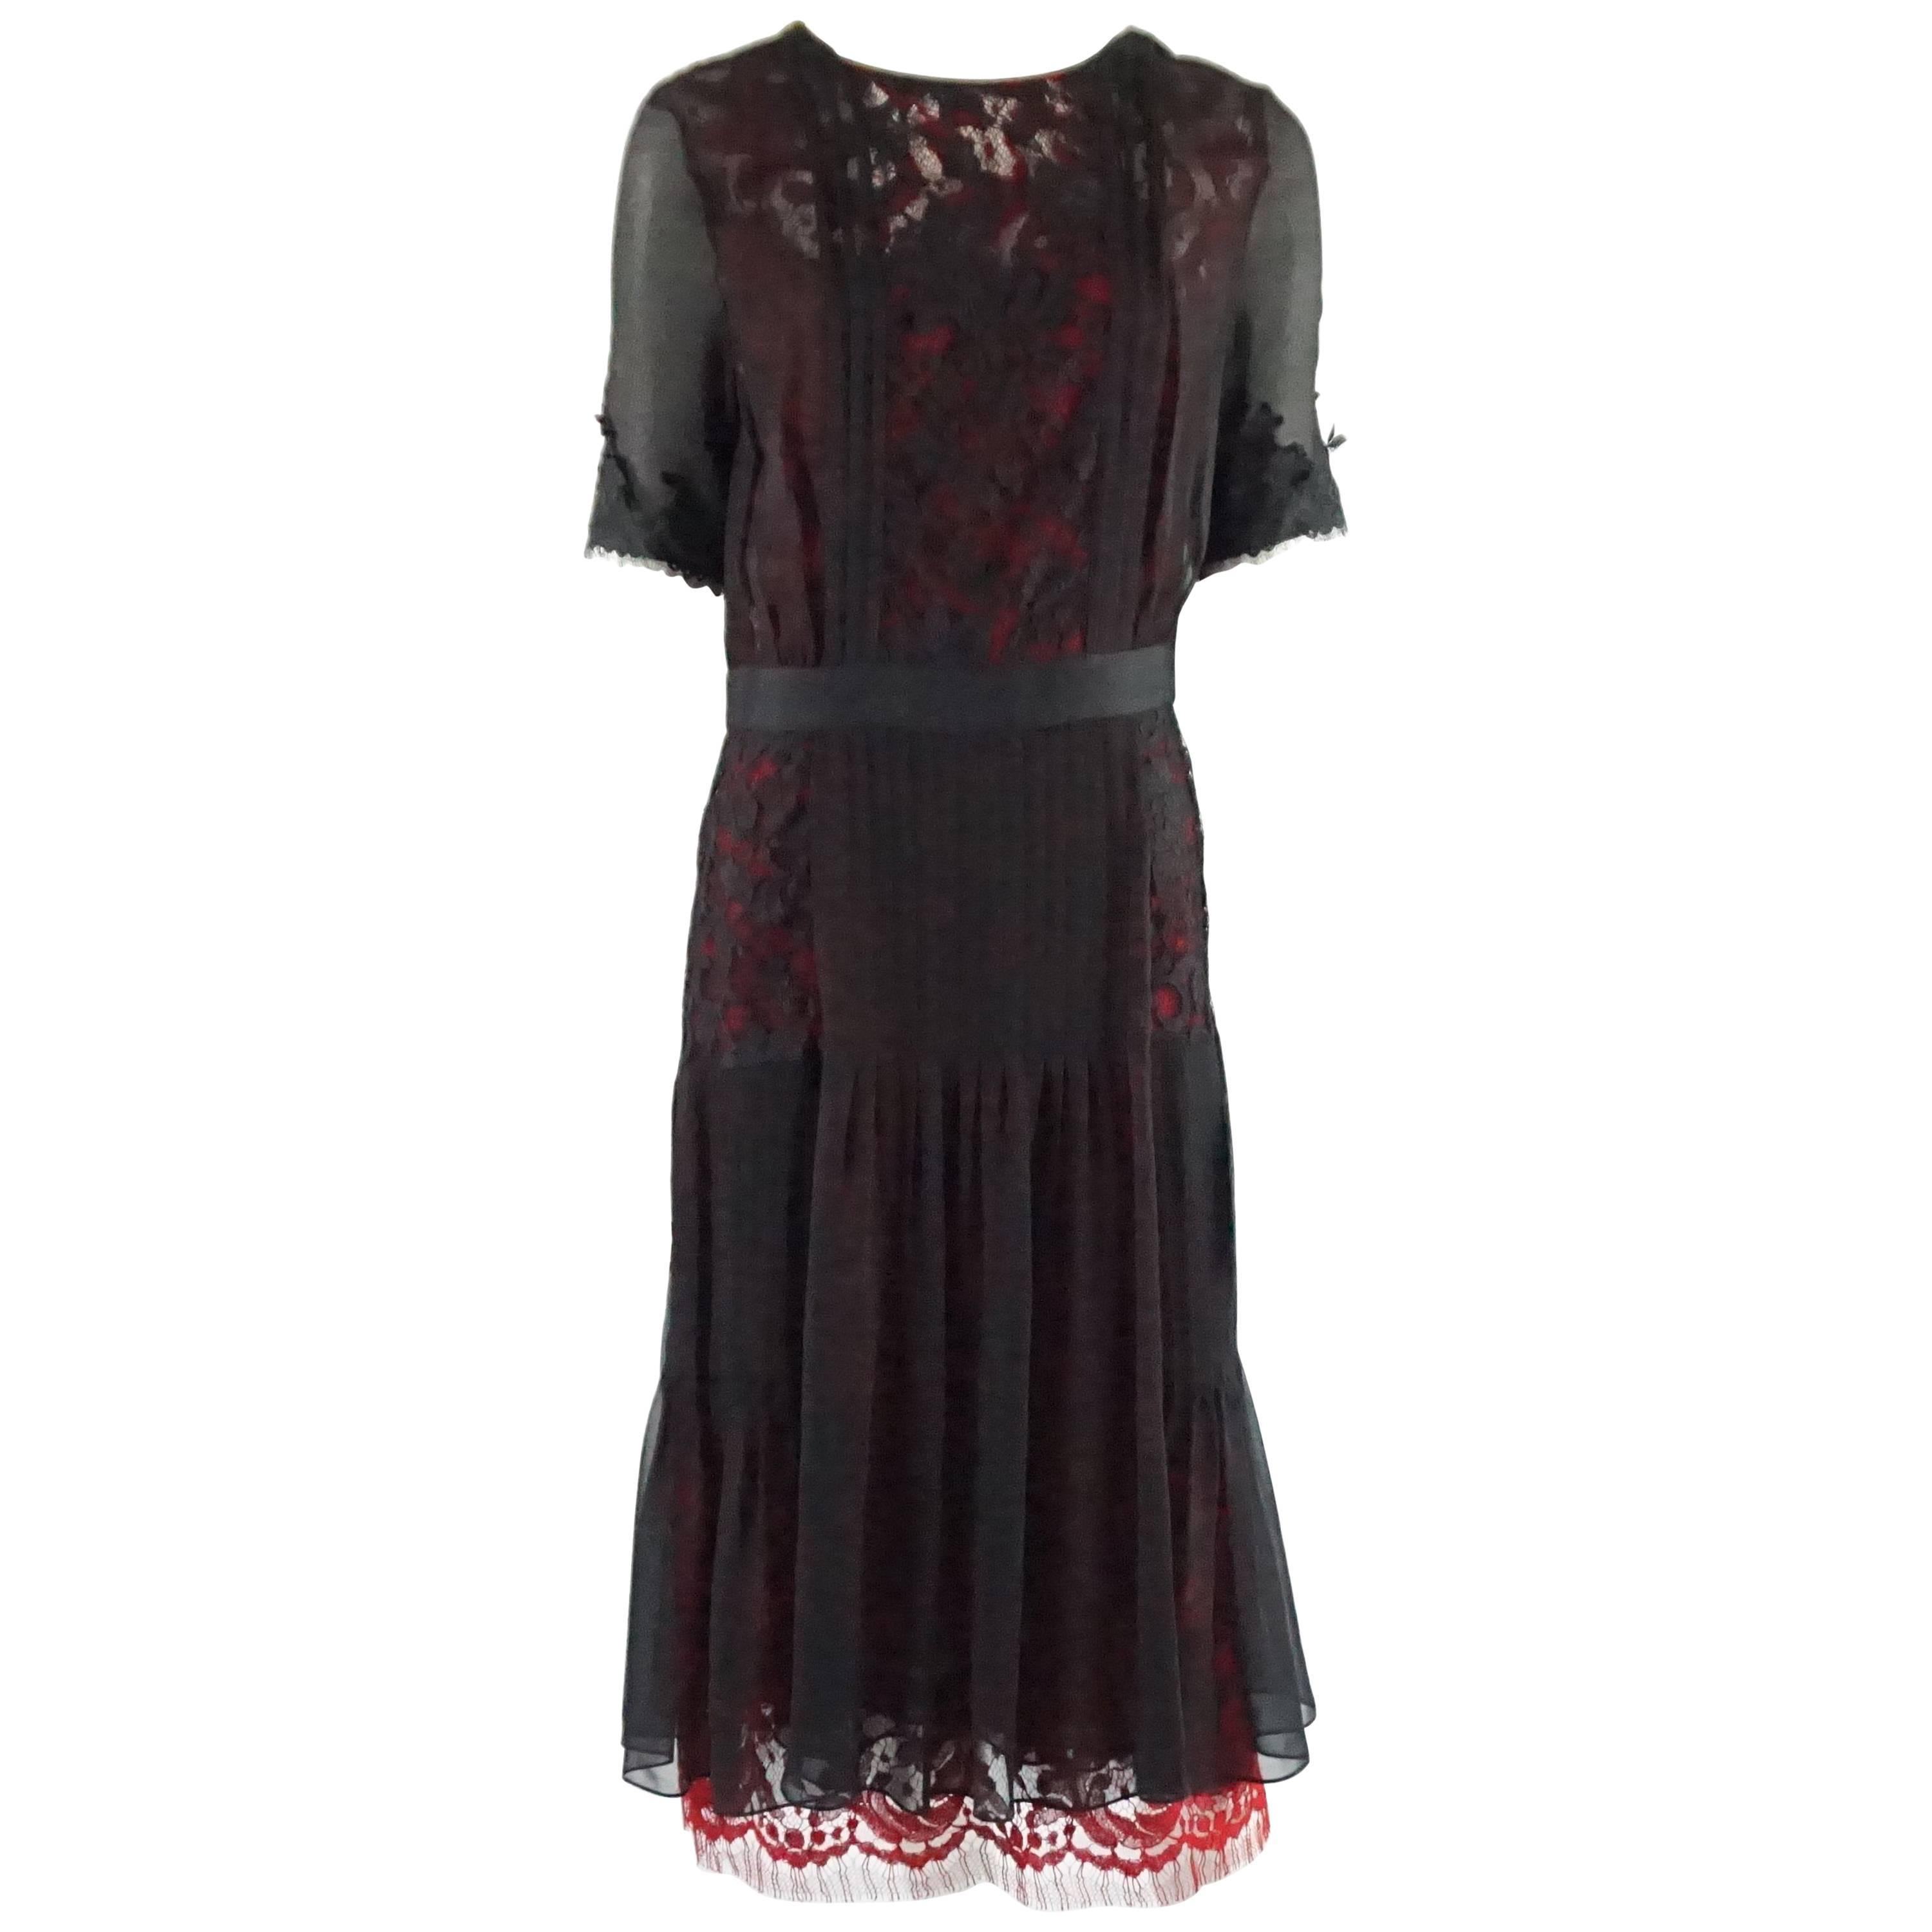 Oscar de la Renta Black and Red Silk Chiffon Dress with Lace - 10 - NWT